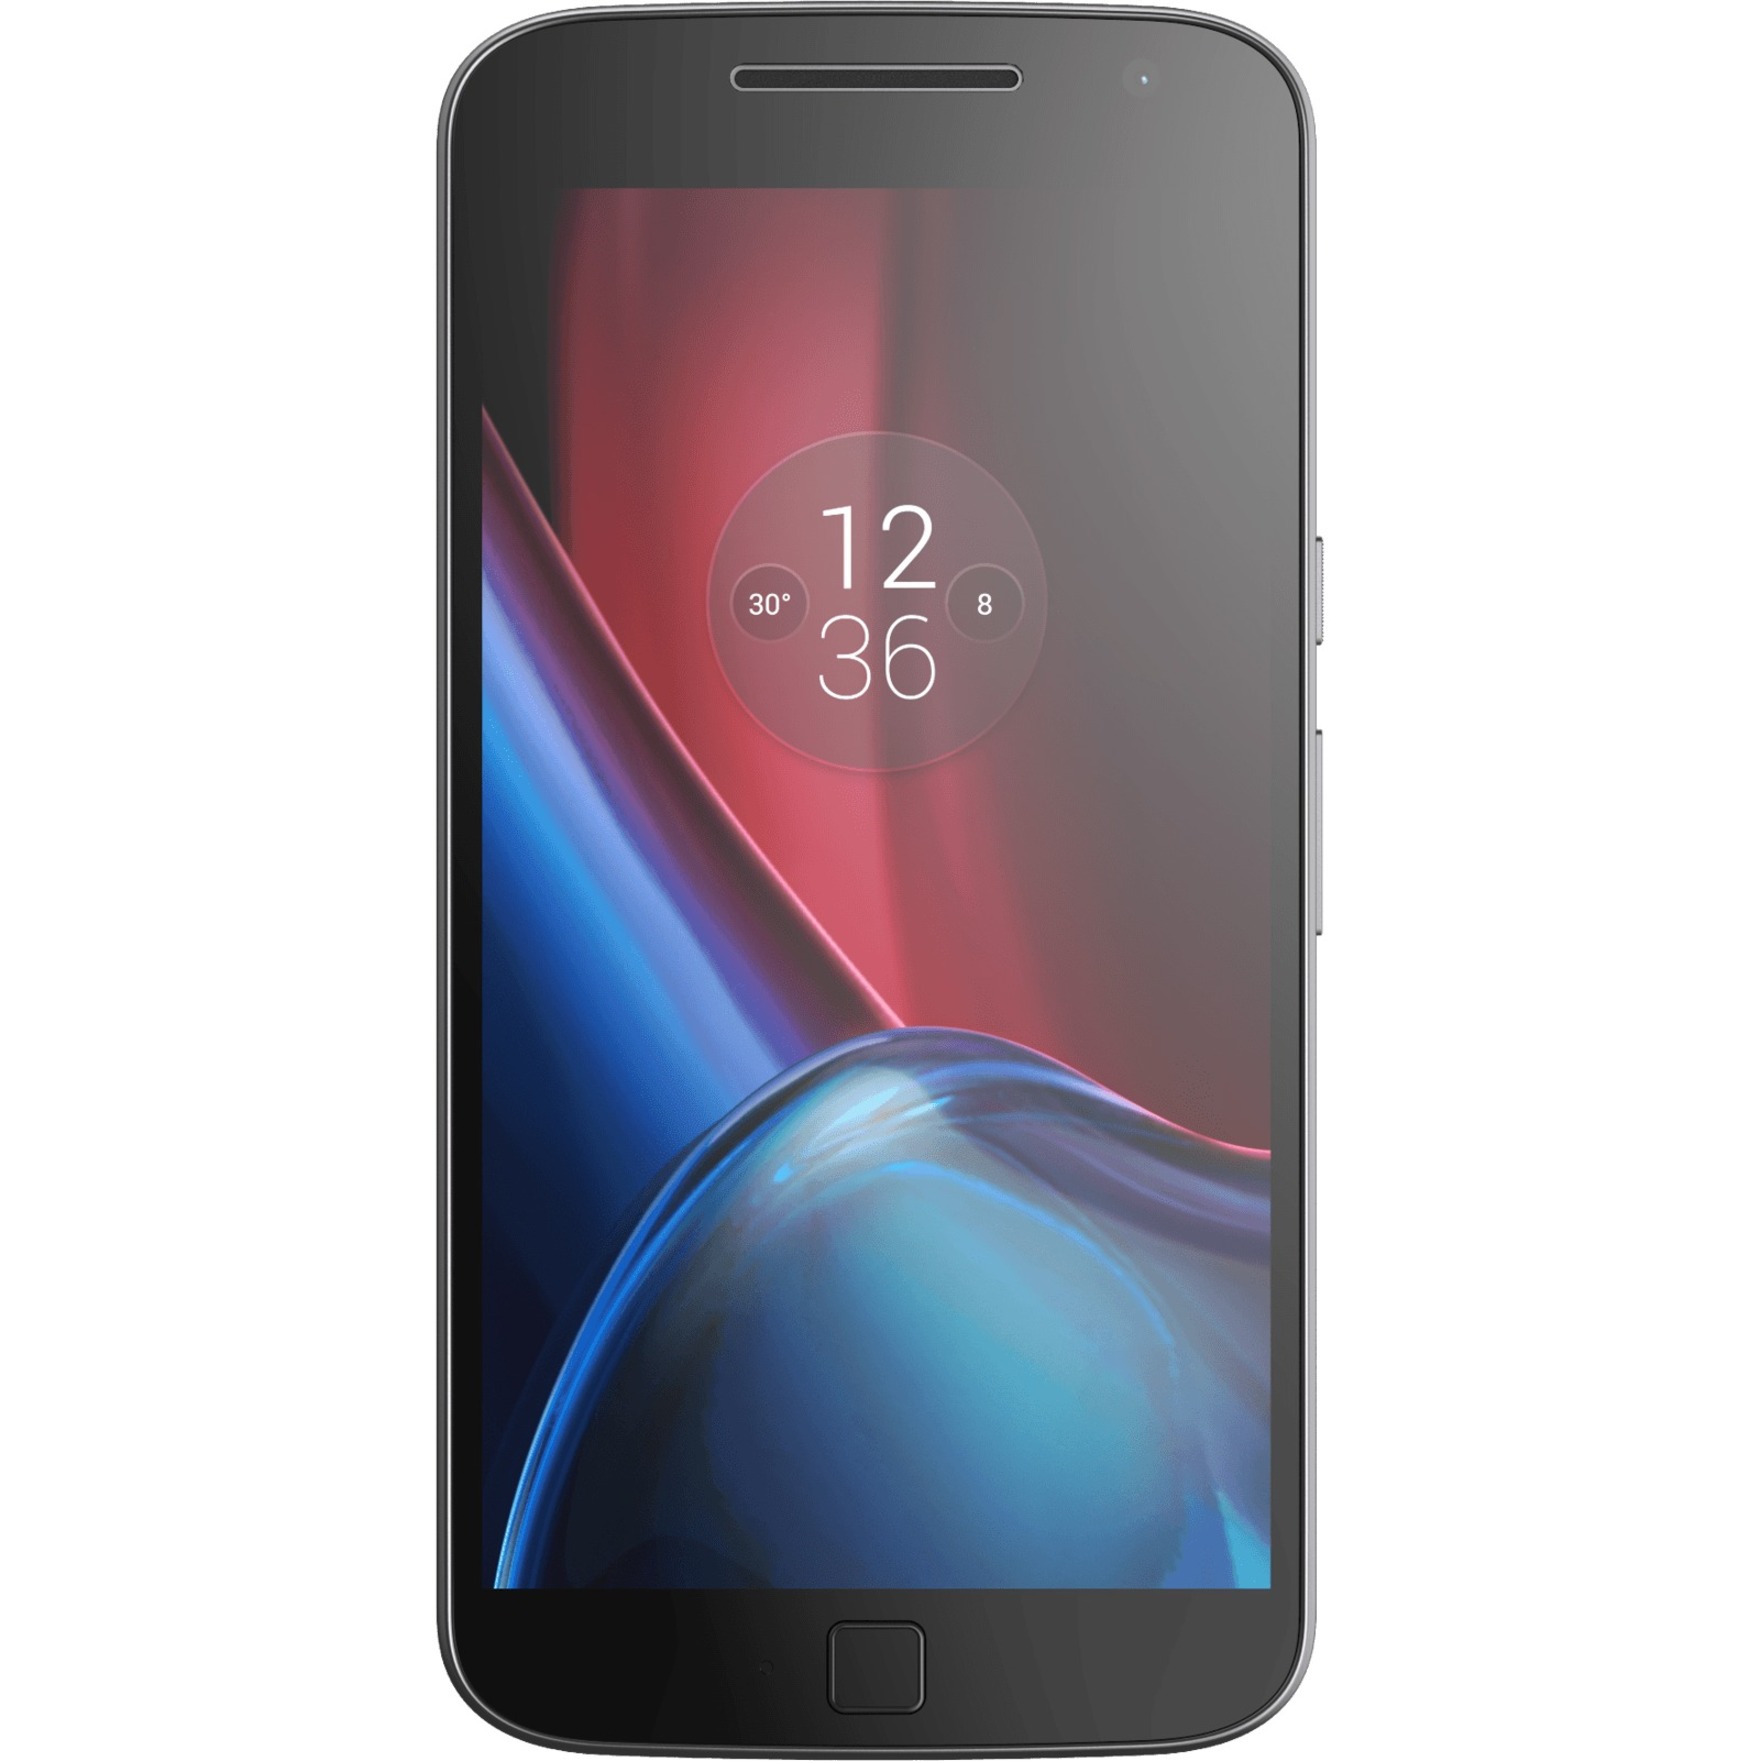 Motorola Moto G4 Plus 16GB Smartphone (Unlocked), Black - image 3 of 15